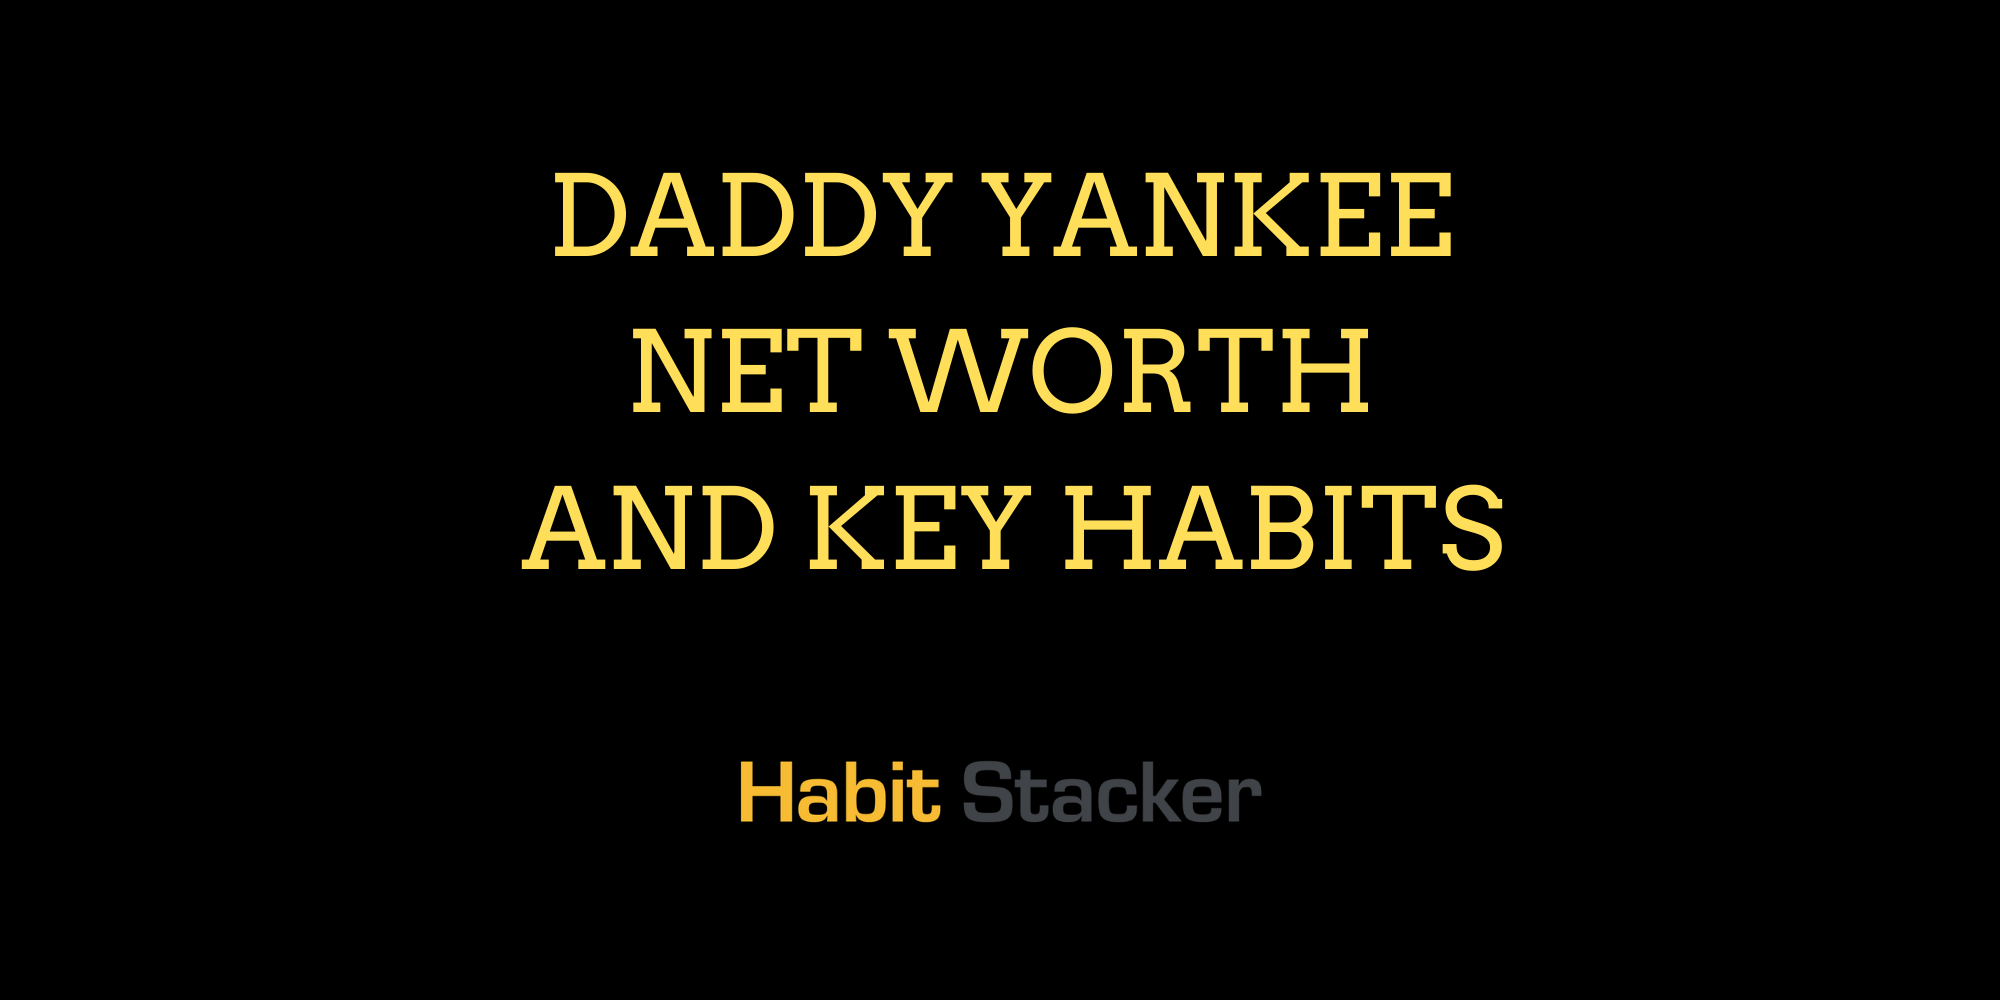 Daddy Yankee Net Worth and Key Habits